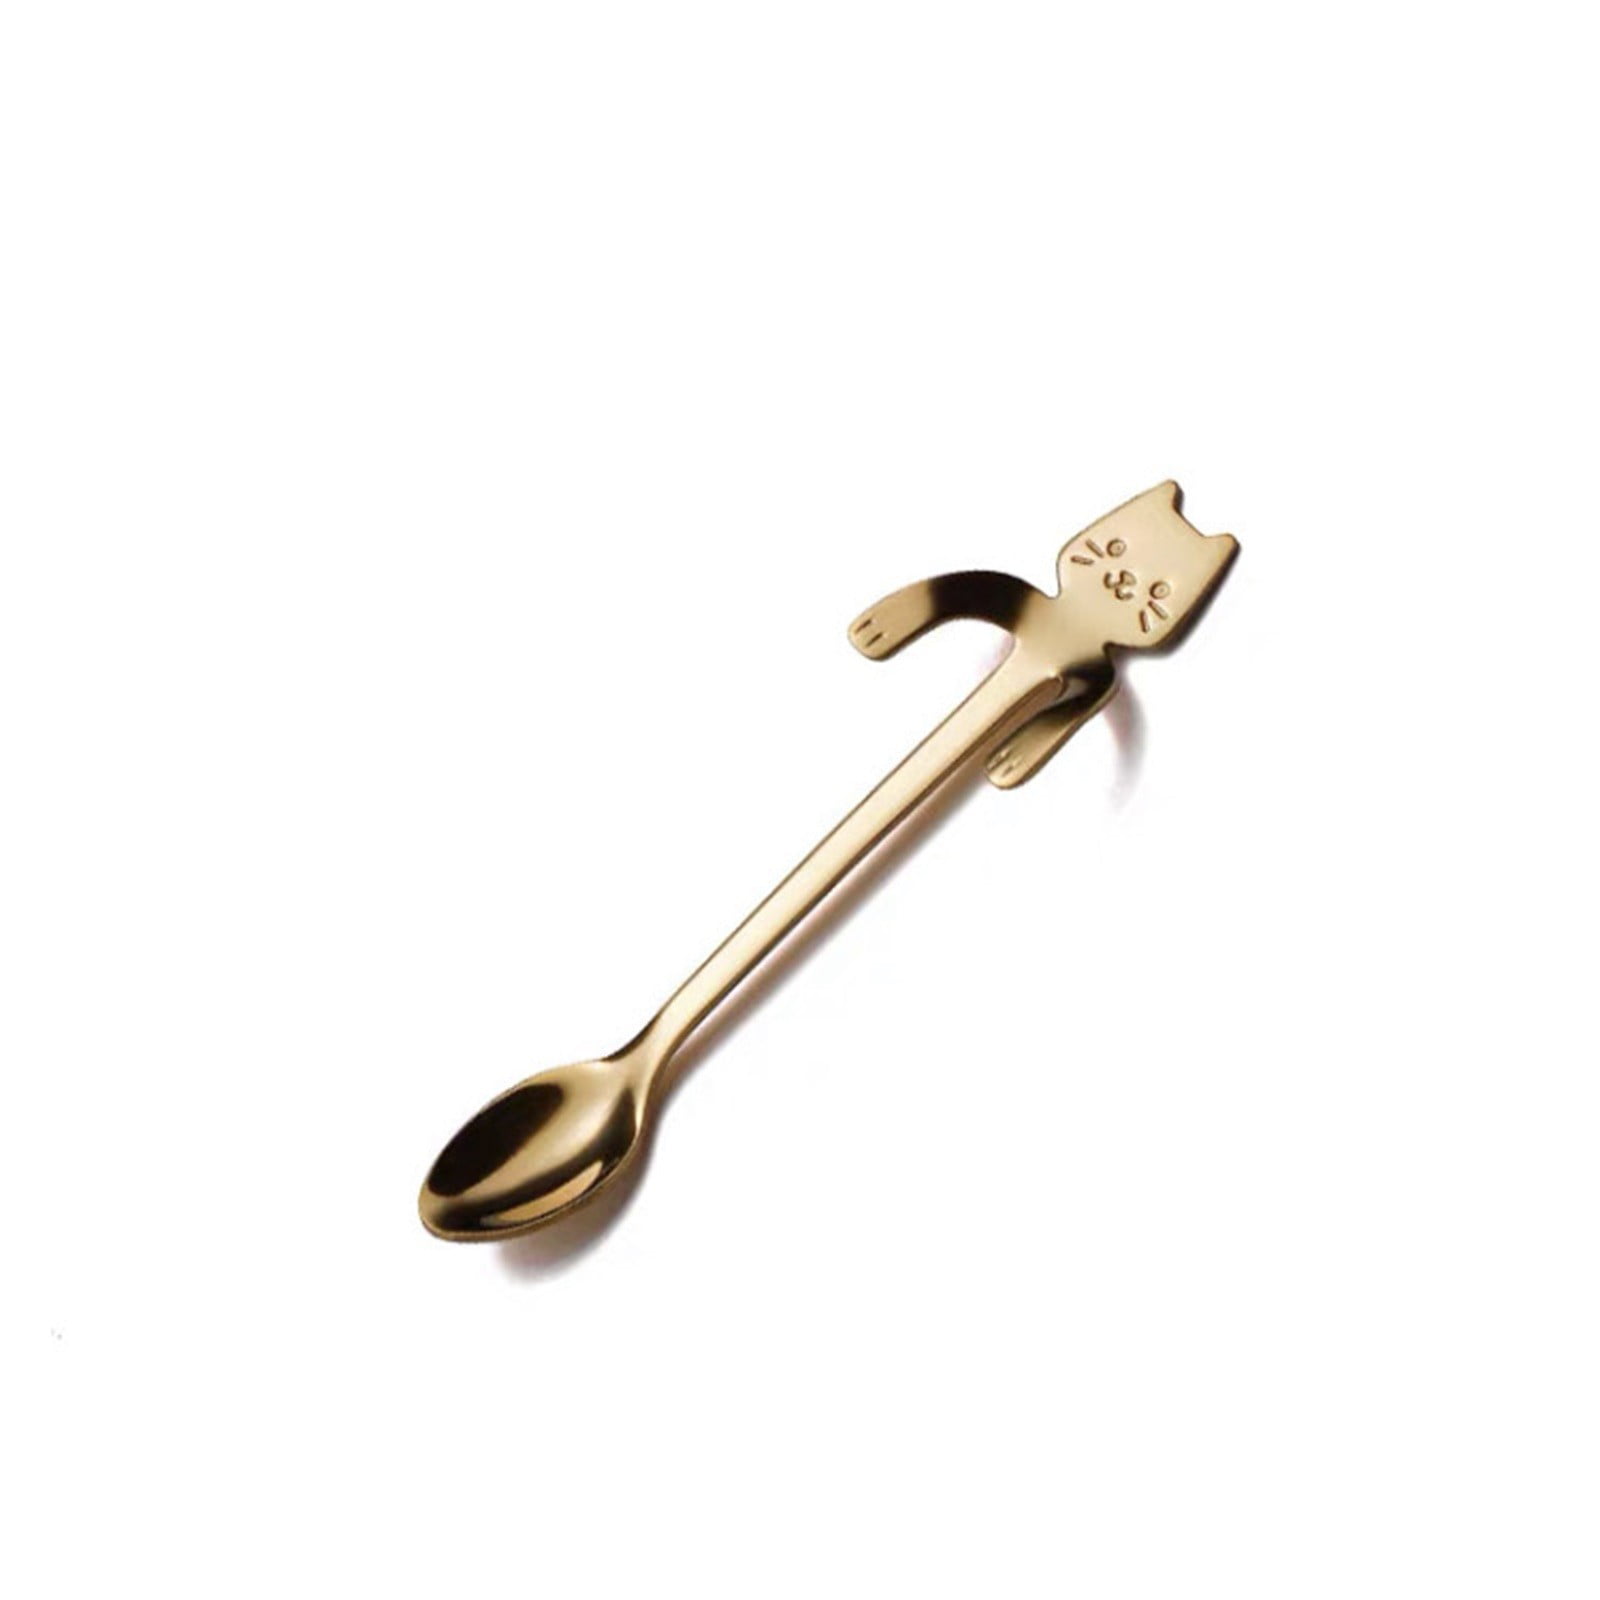 Cute Cat Spoon Long Handle Spoons Flatware Coffee Drinking Tool Kitchen Gadget Silver